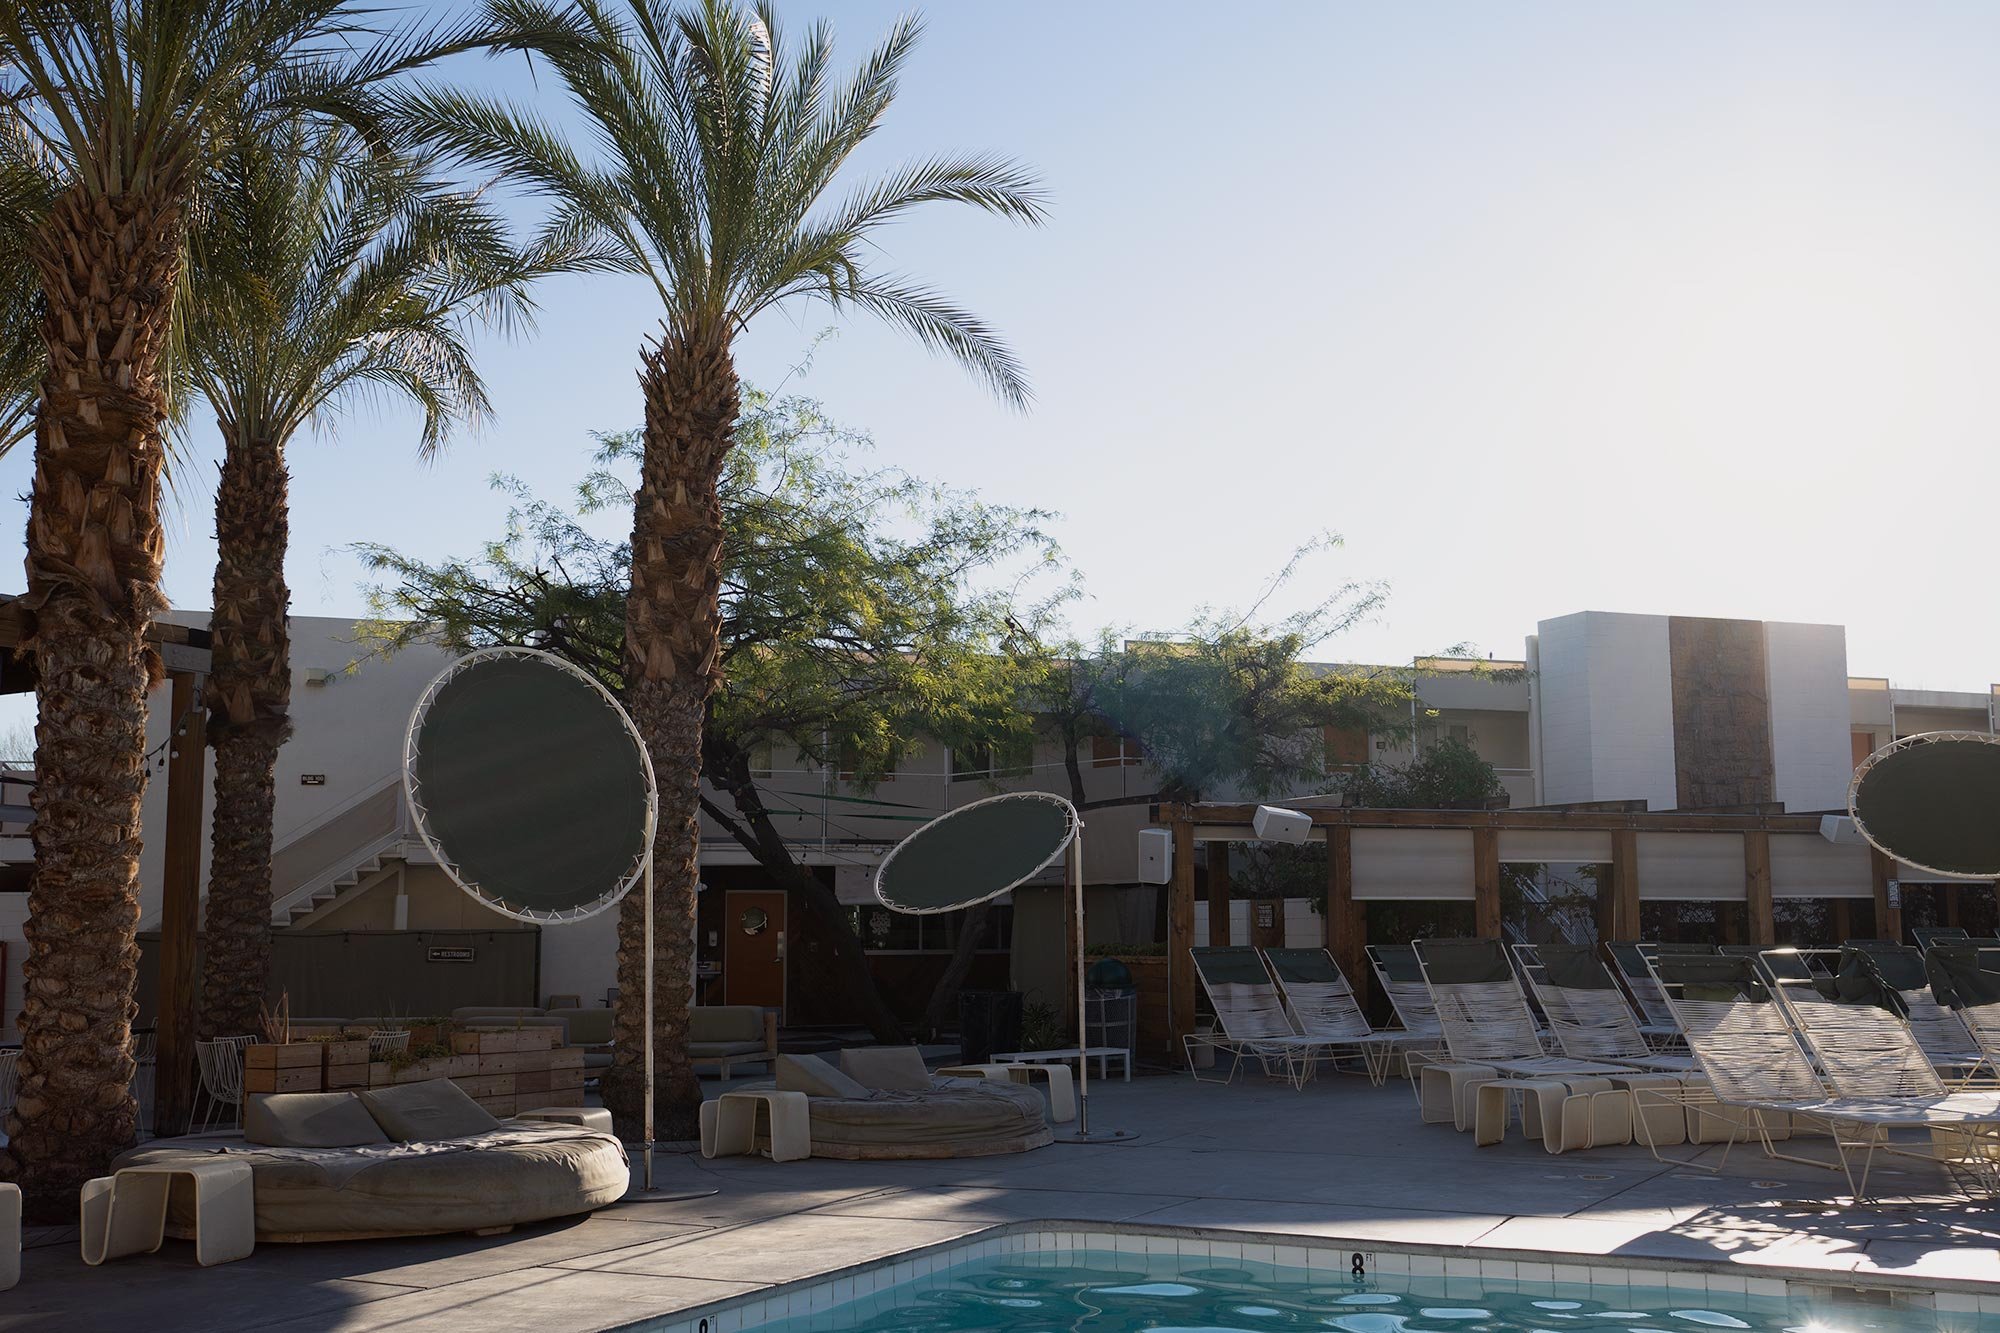 The Ace Hotel Swim Club Palm Springs Trvl Diary